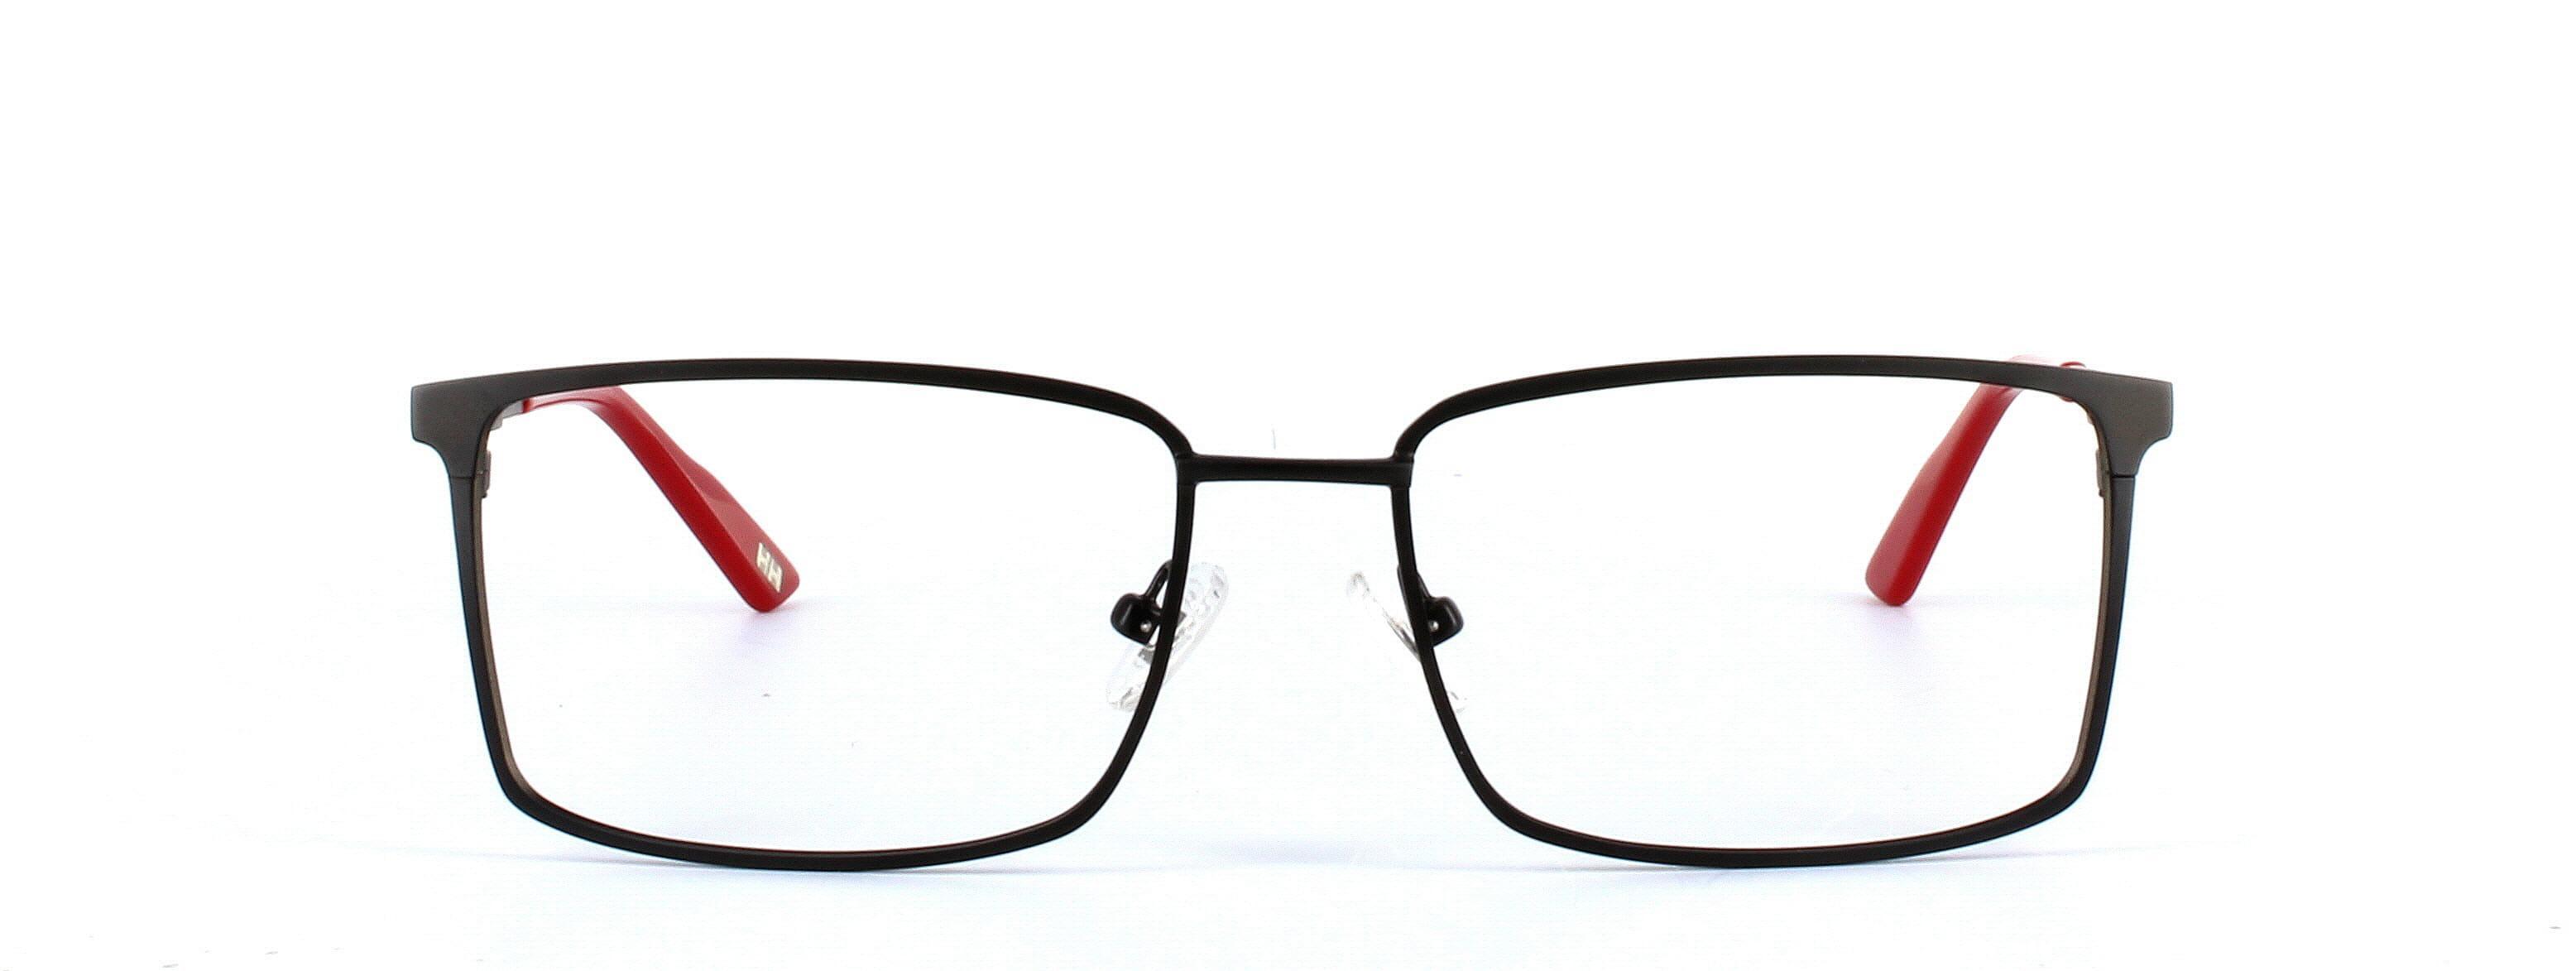 Helly Hansen HH 1028 Black Full Rim Rectangular Metal Glasses - Image View 5